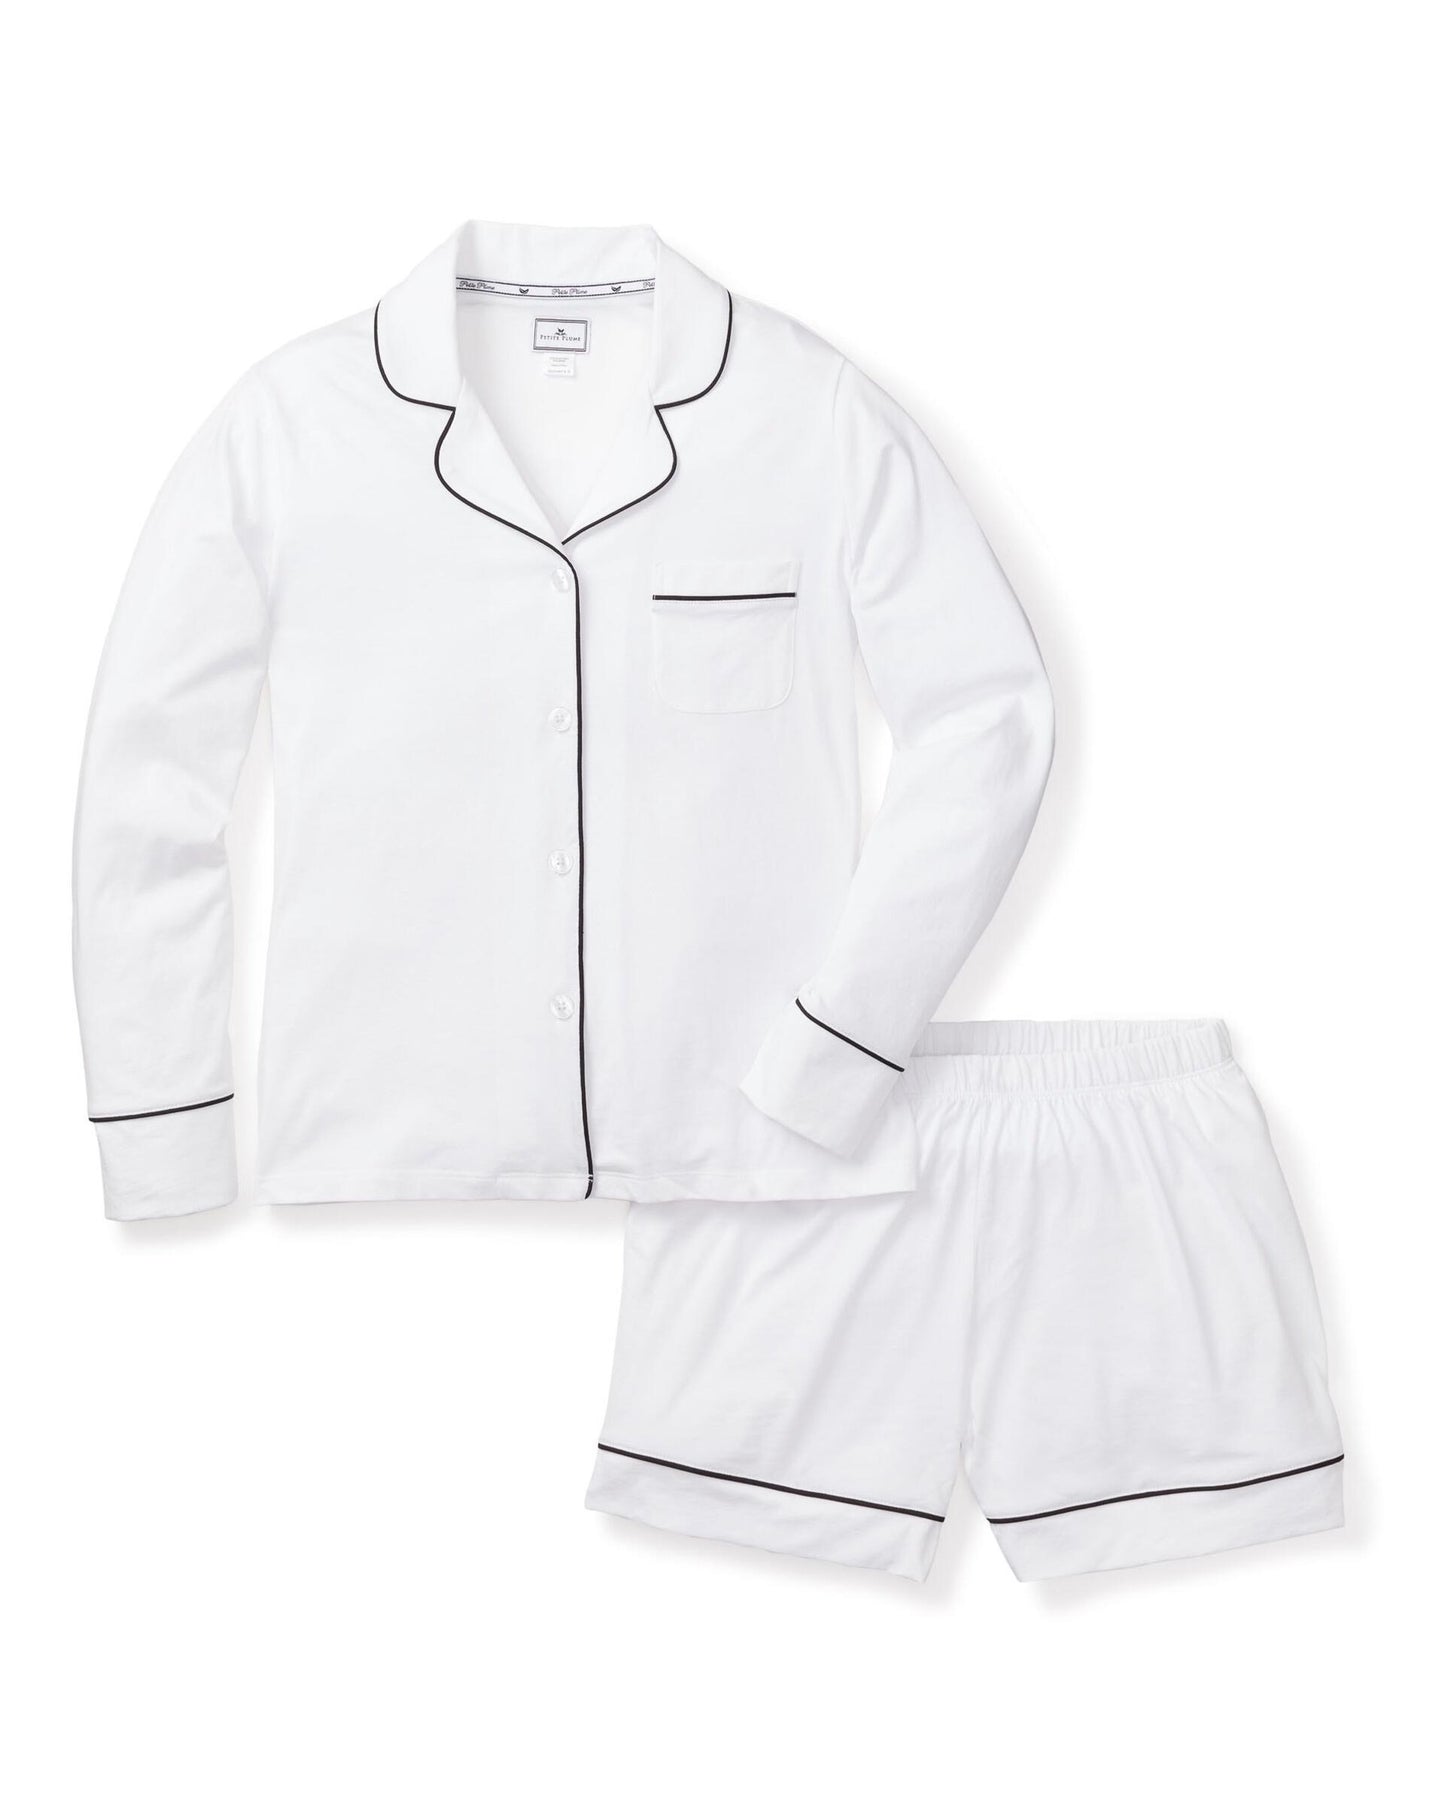 Petite Plume Teen Luxe Pima White Long Sleeve Short Set